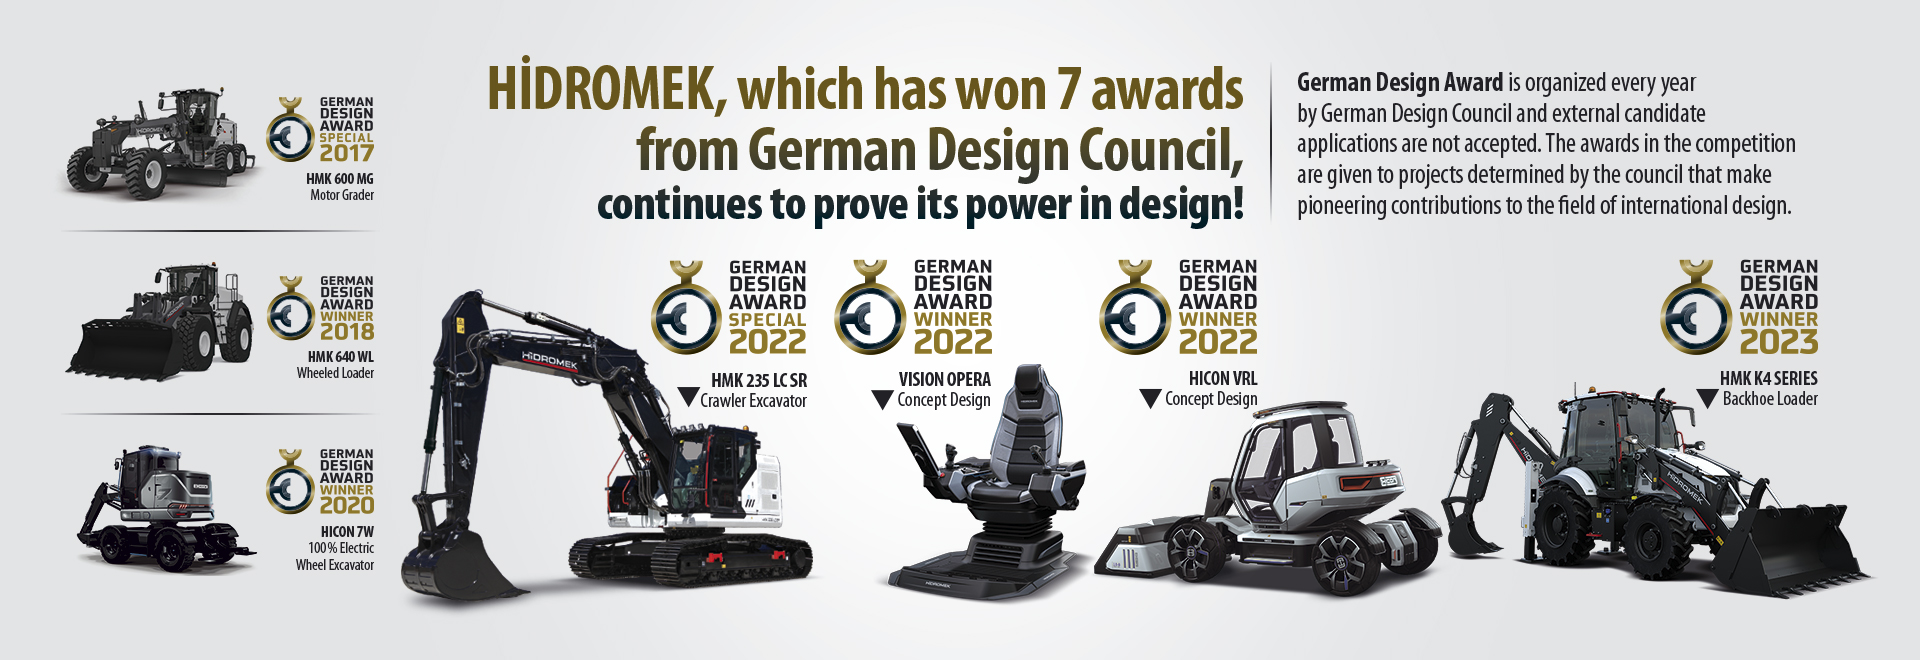 Hidromek ha vinto per sette volte il German Design Award